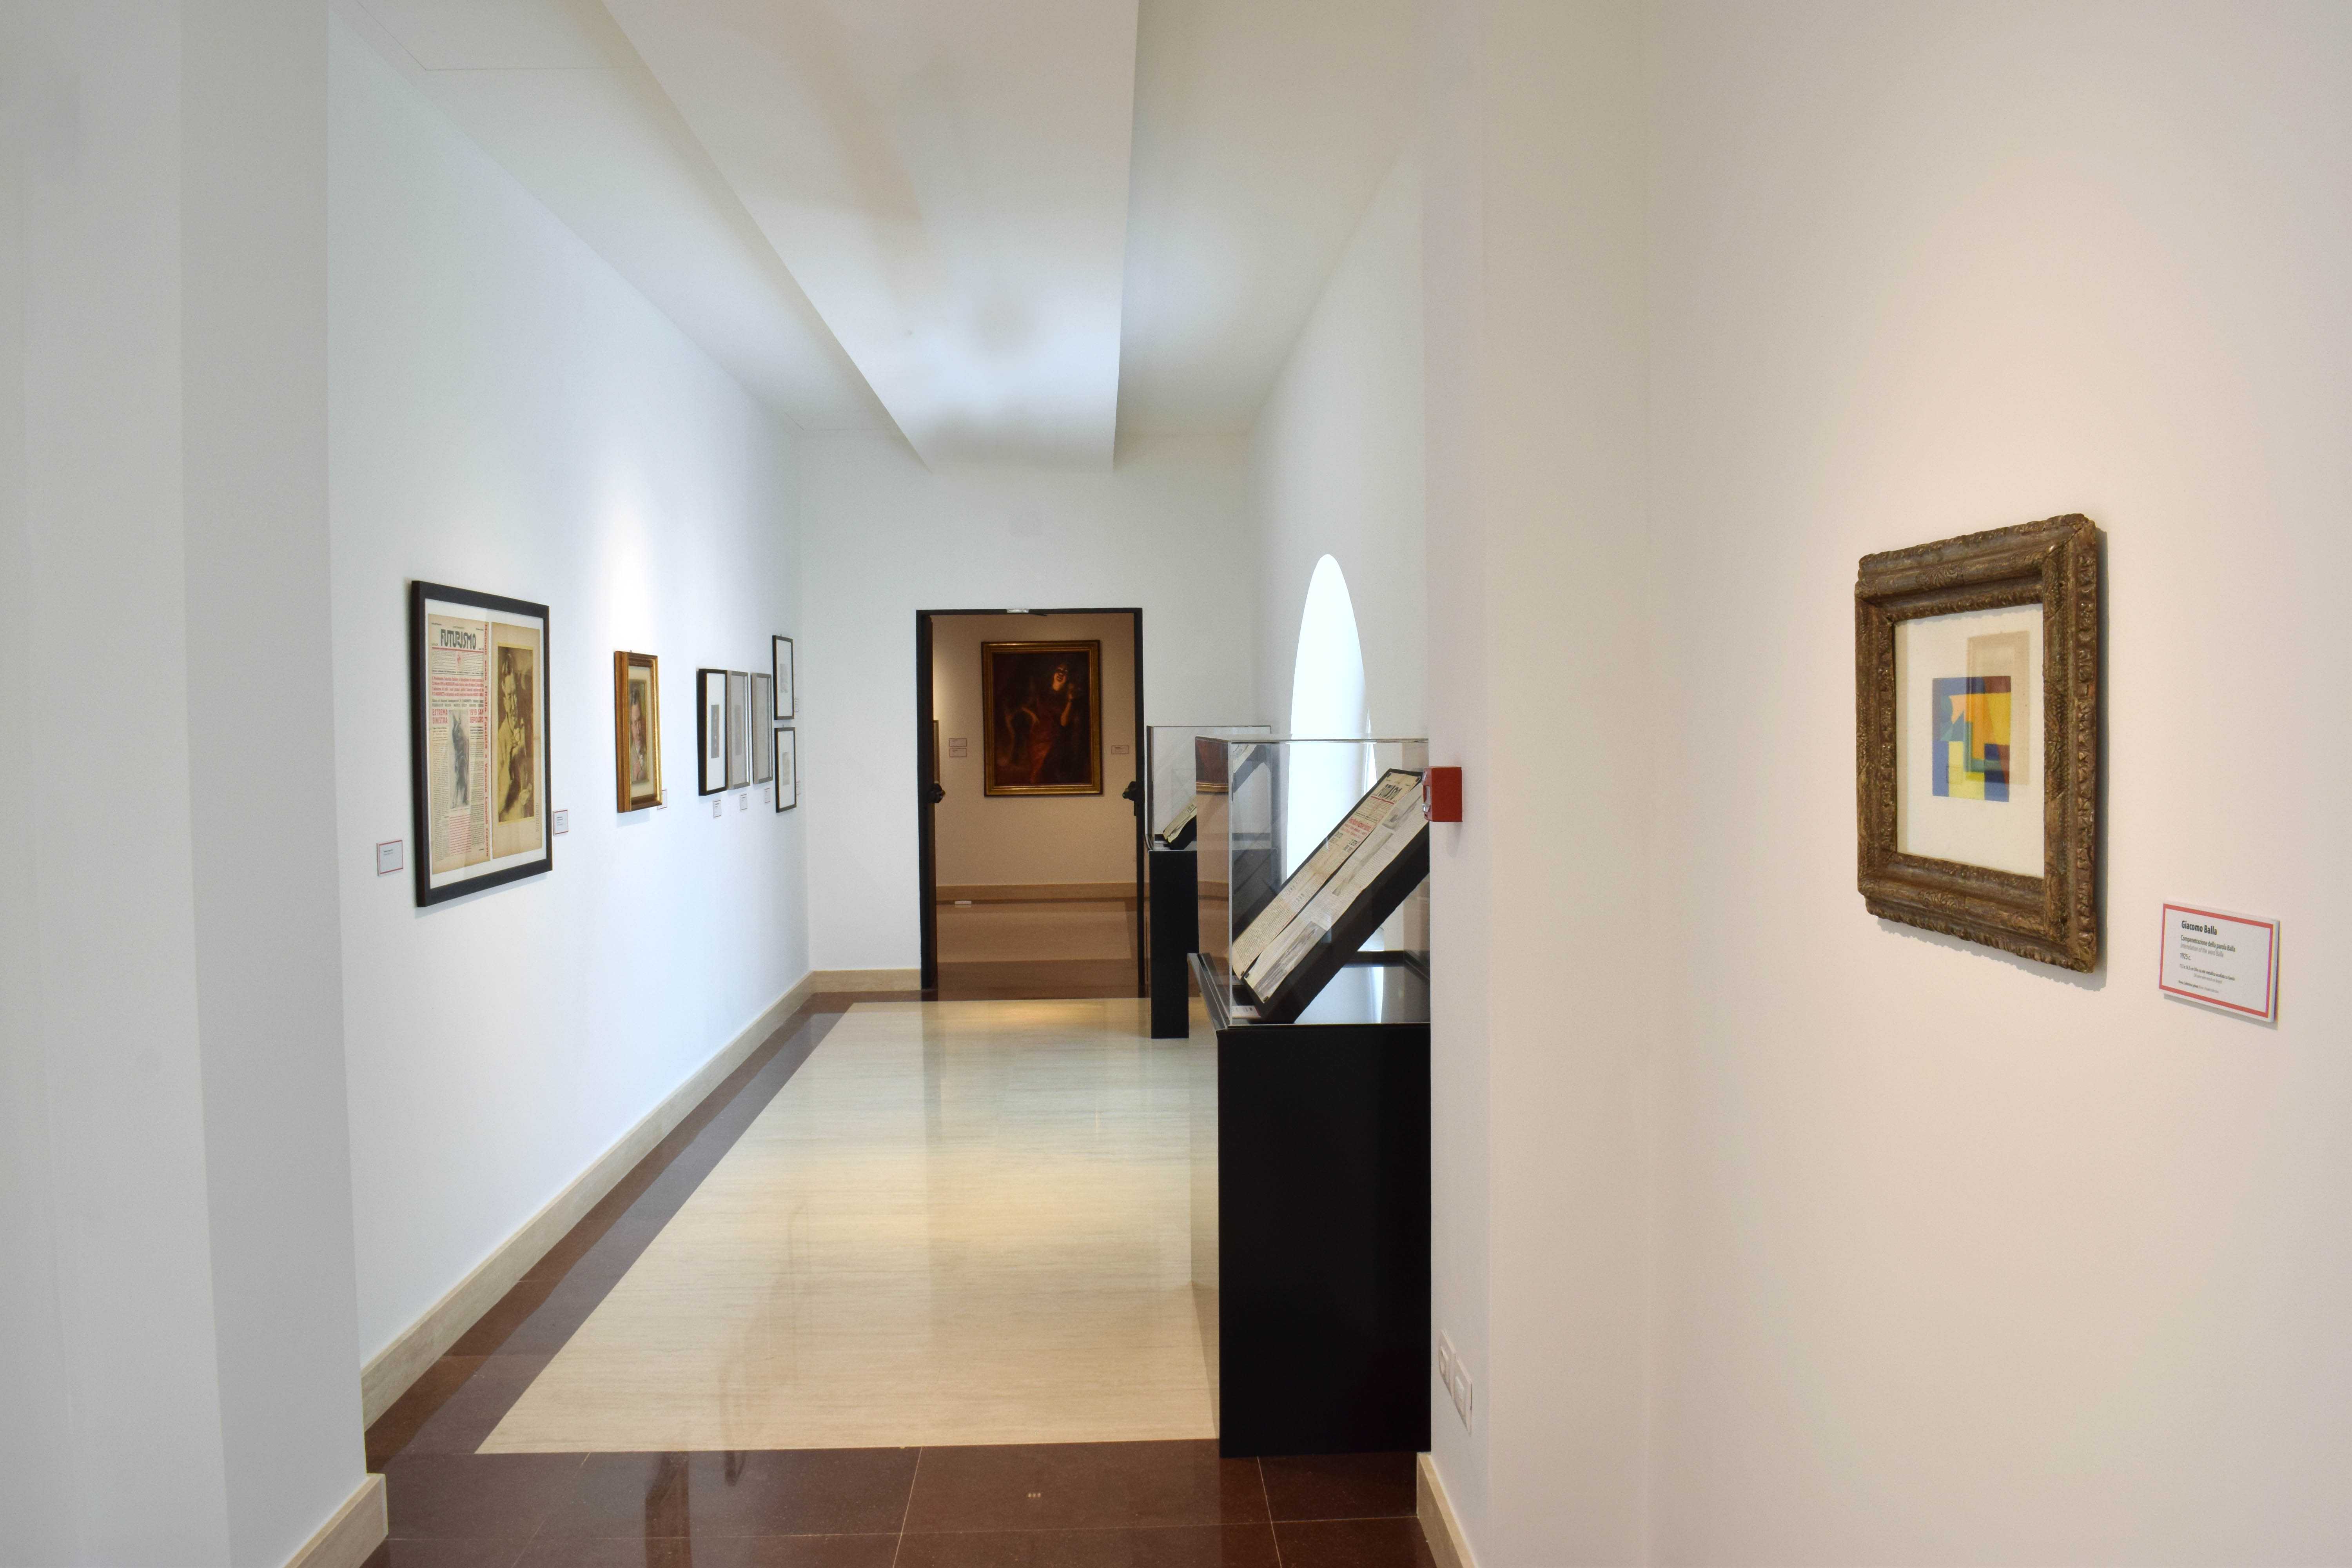 Giacomo Balla: Abstract Futurism to Iconic Futurism. Exhibition, Palazzo Merulana, Rome: 21 March - 17 June 2019